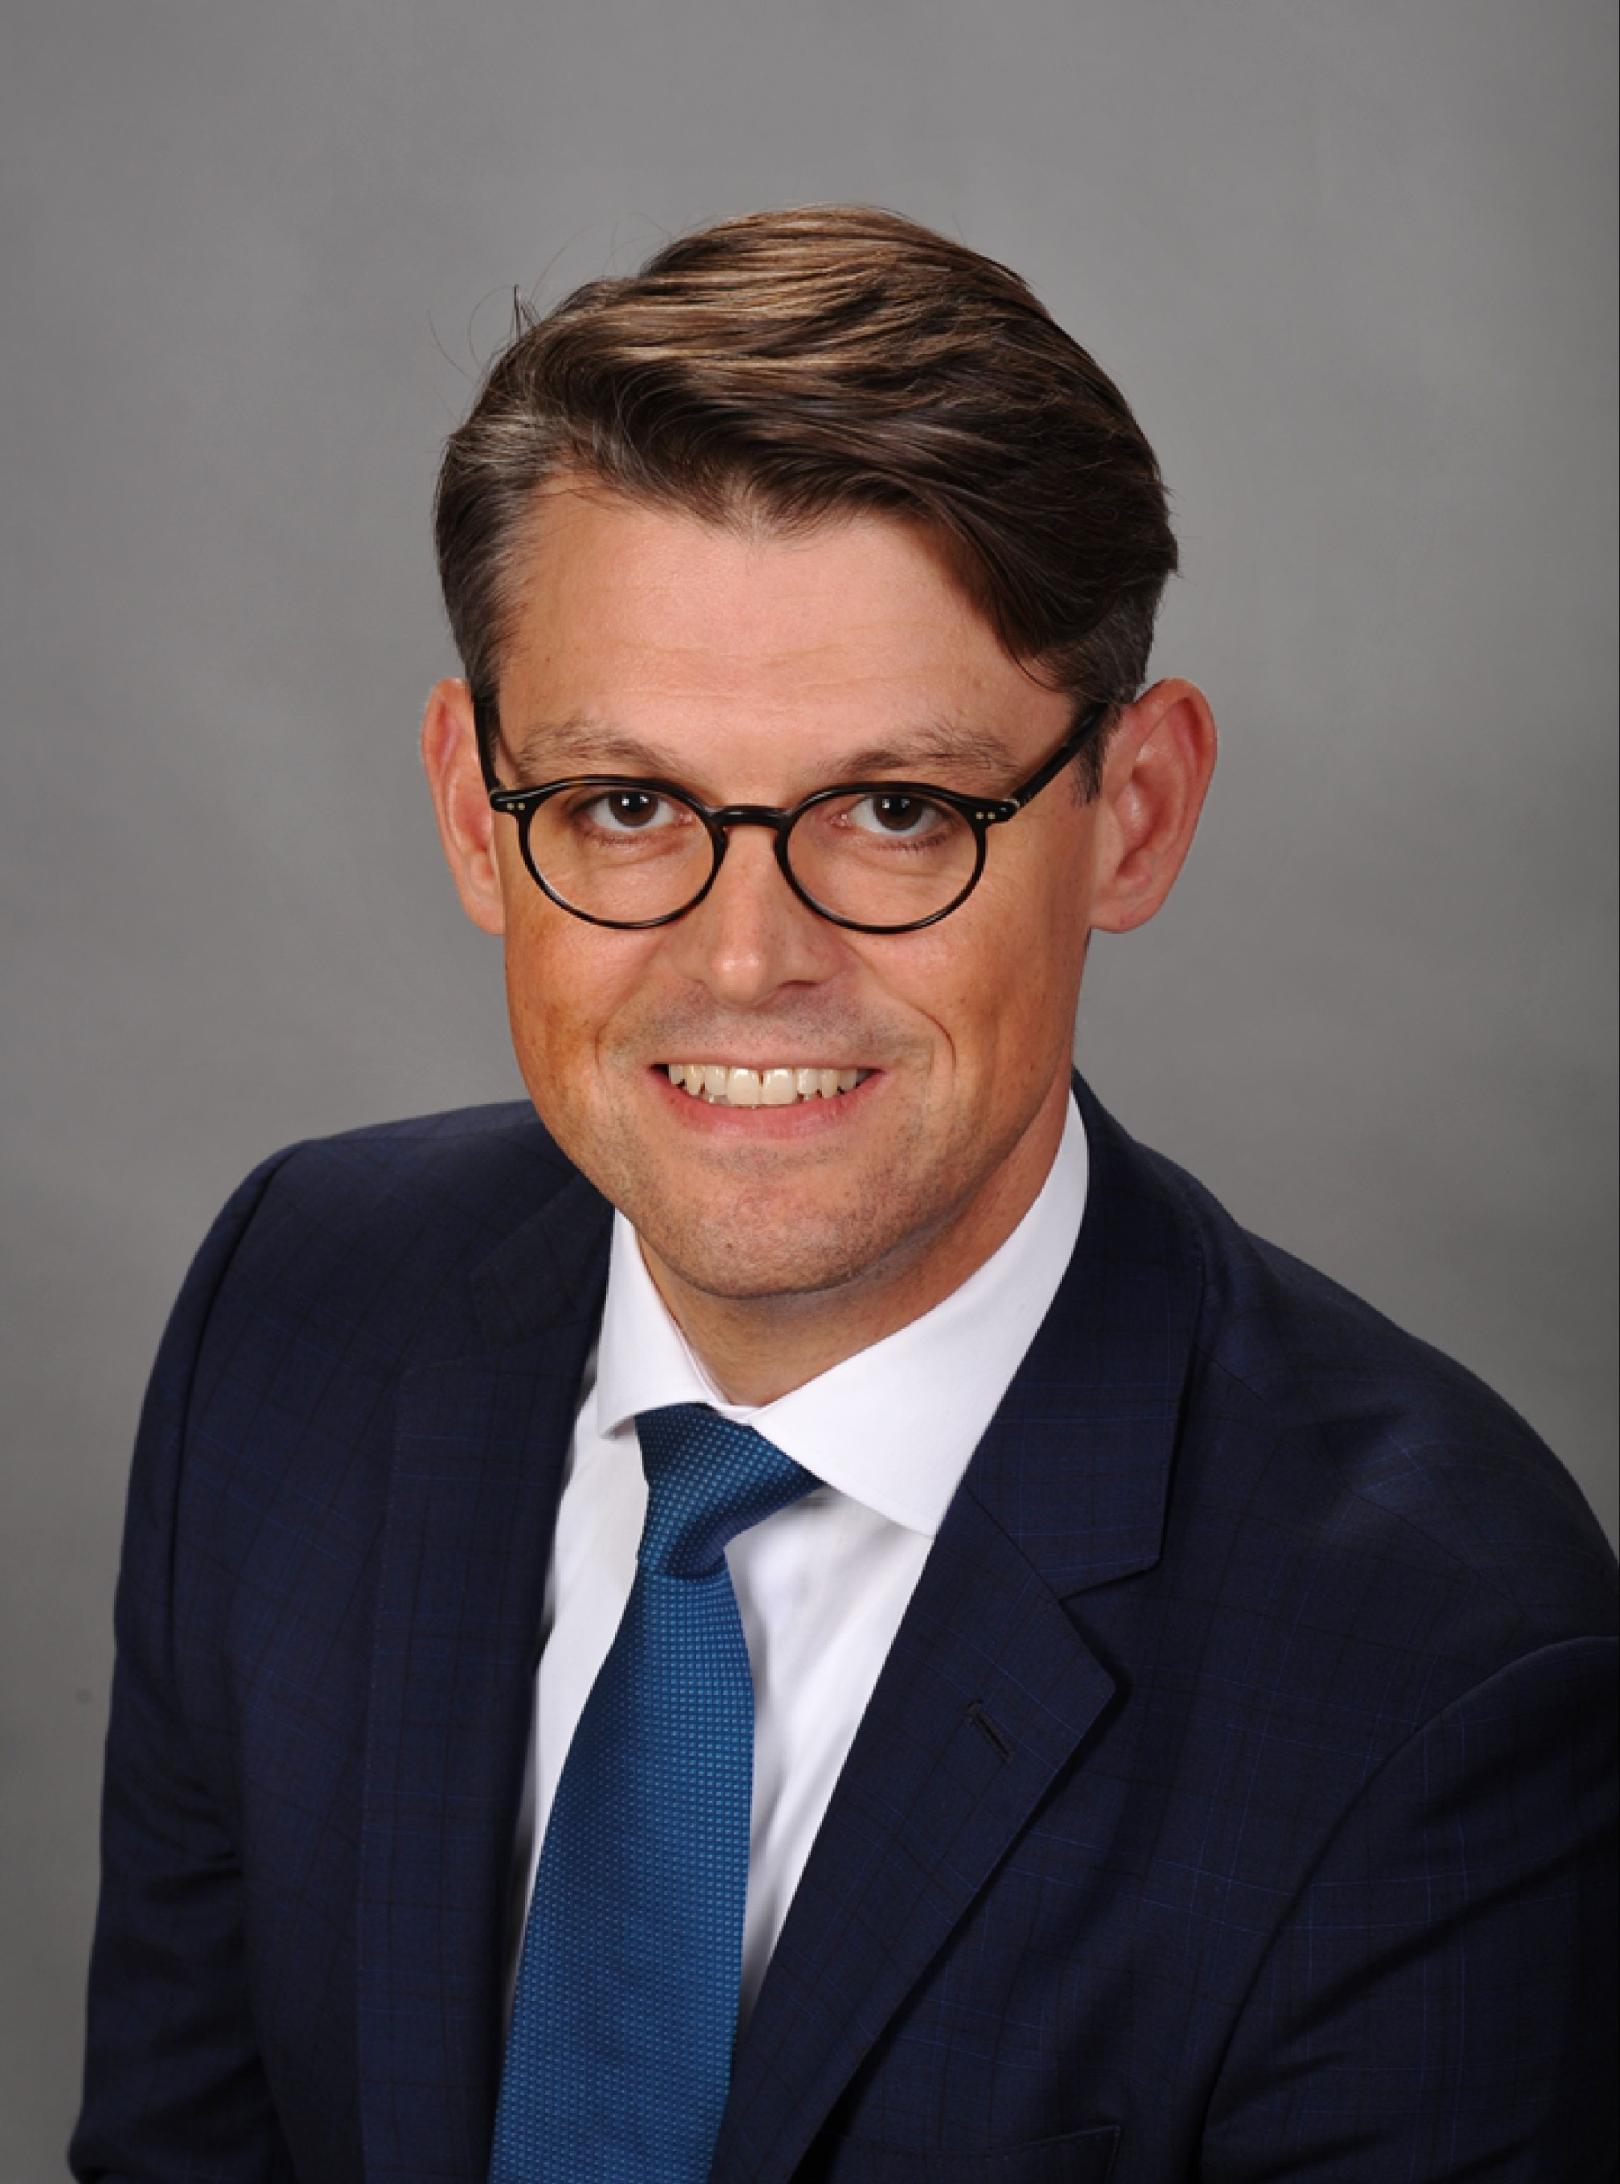 Diplom-Volkswirt Martin Tölle, Diözesanökonom (c) Malinka, Köln